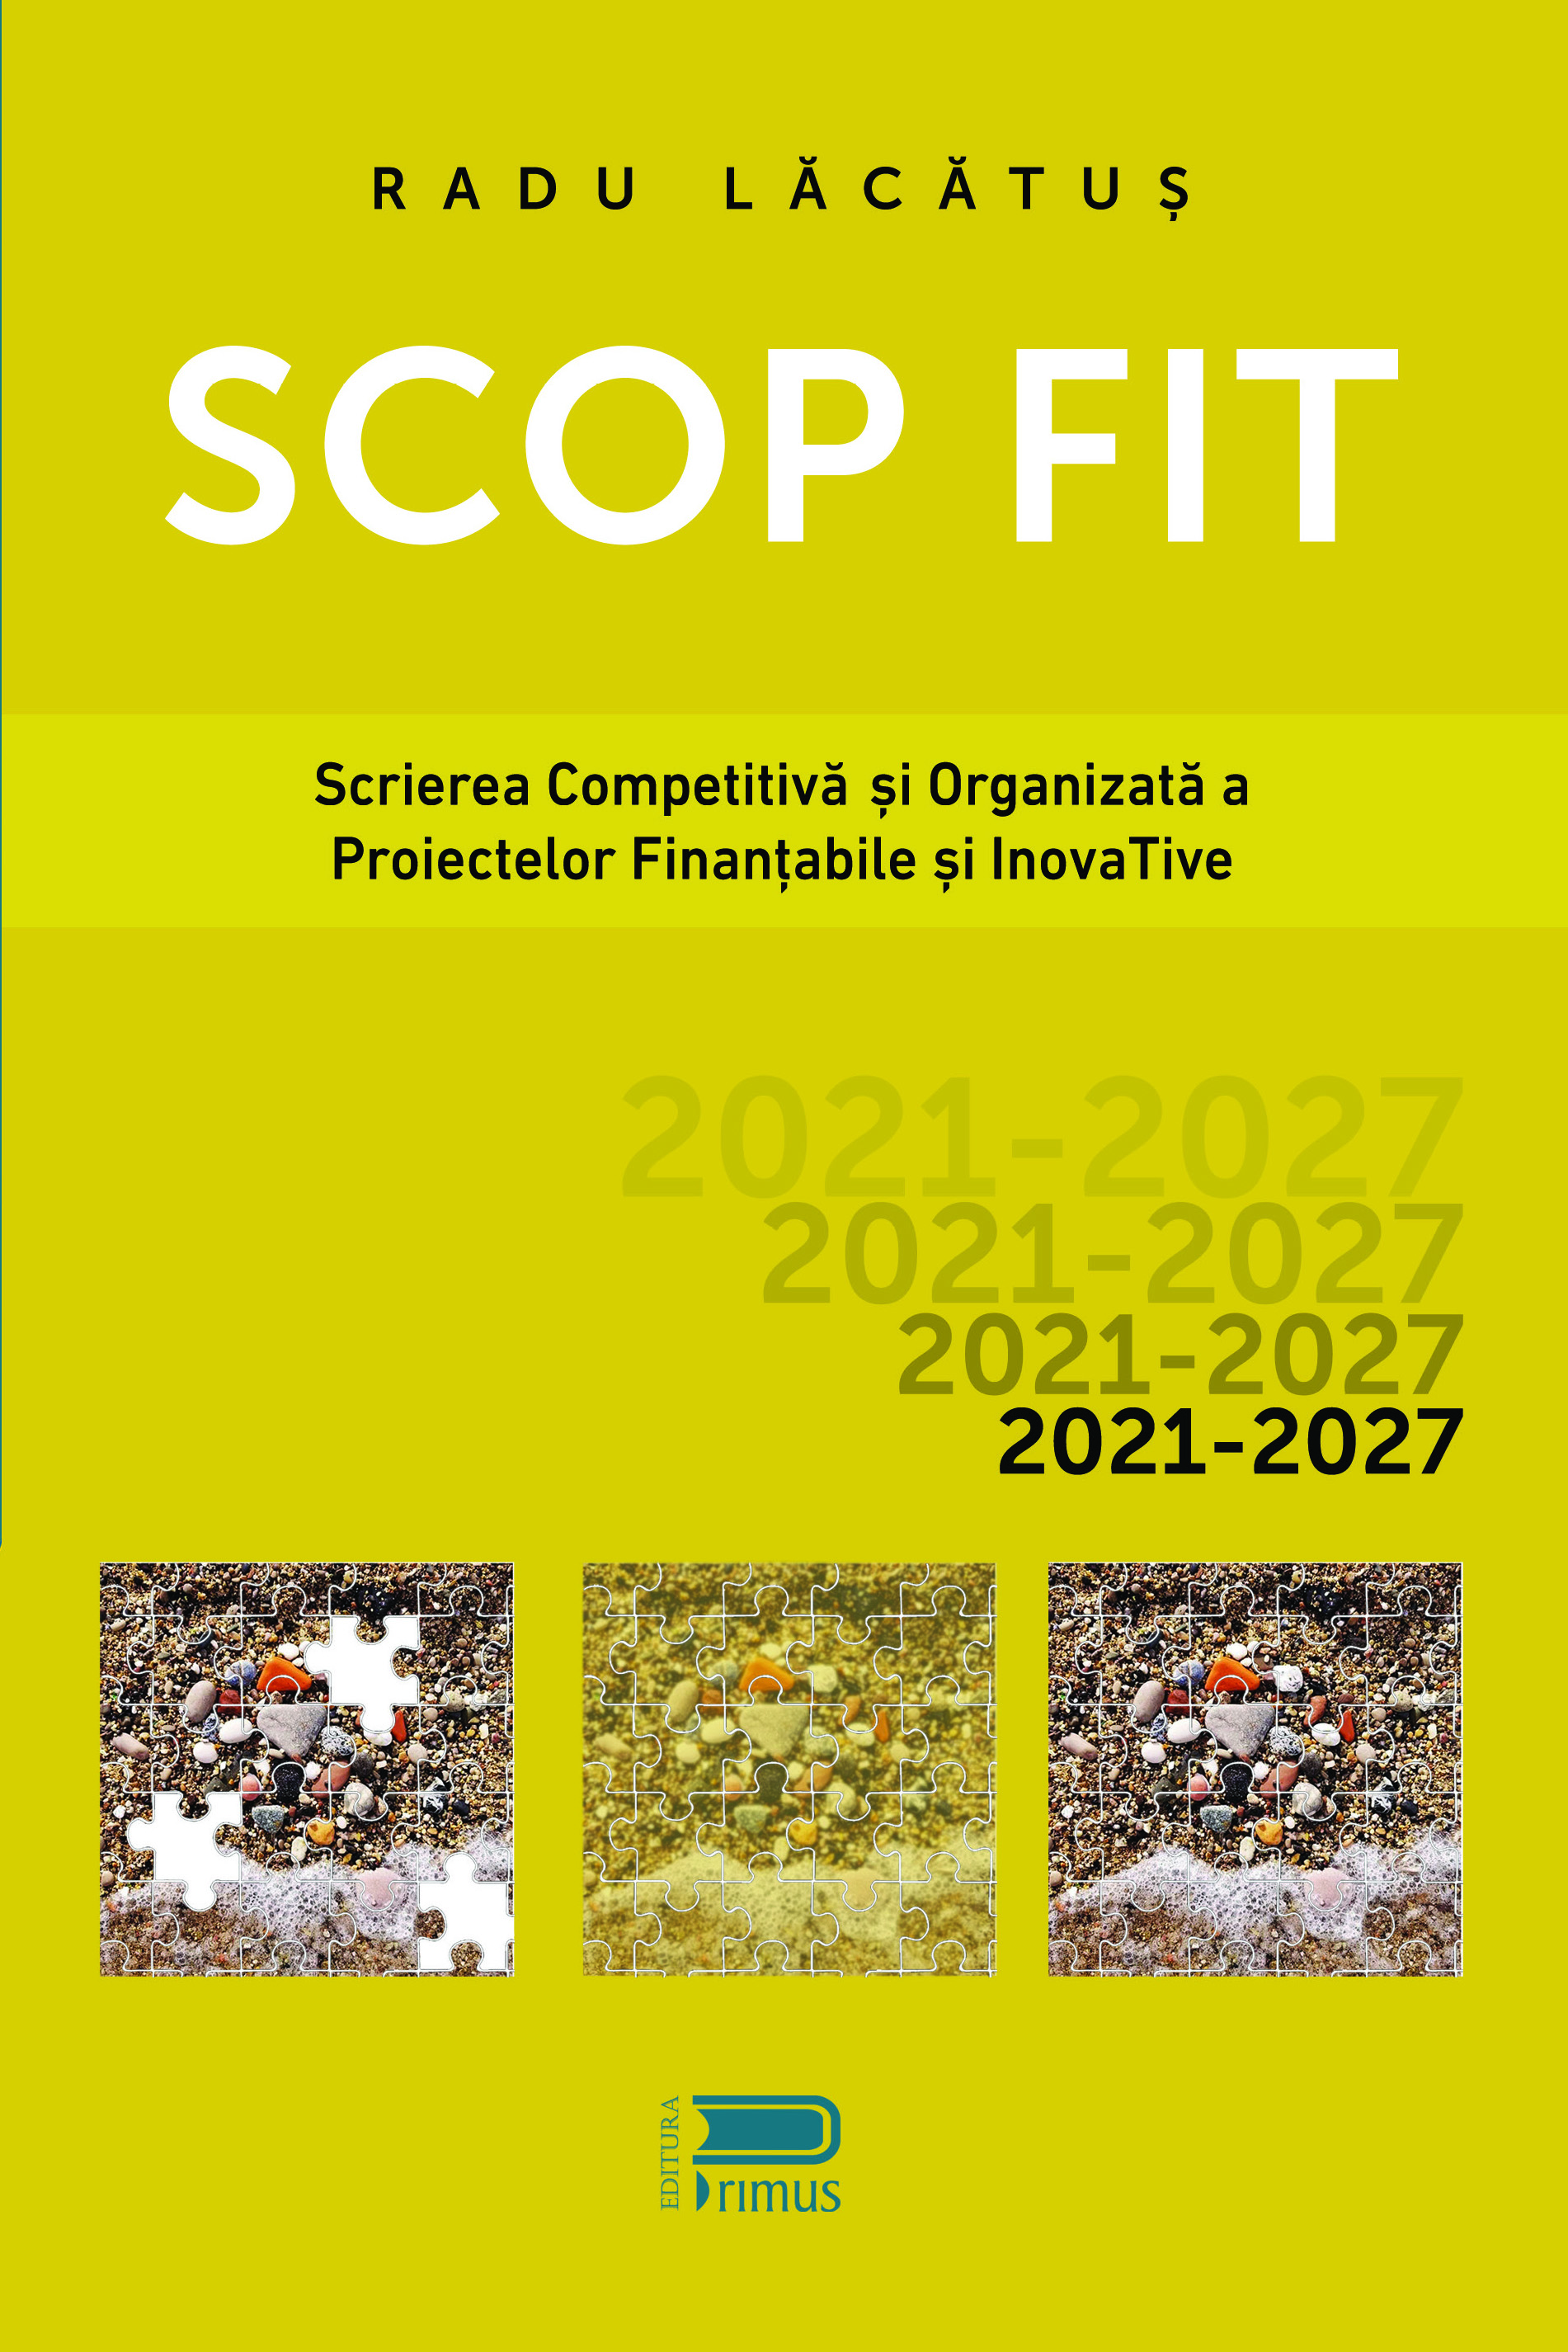 SCOP FIT: Scrierea competitiva si organizata a proiectelor finantabile si inovative | Radu Lacatus carturesti.ro poza bestsellers.ro